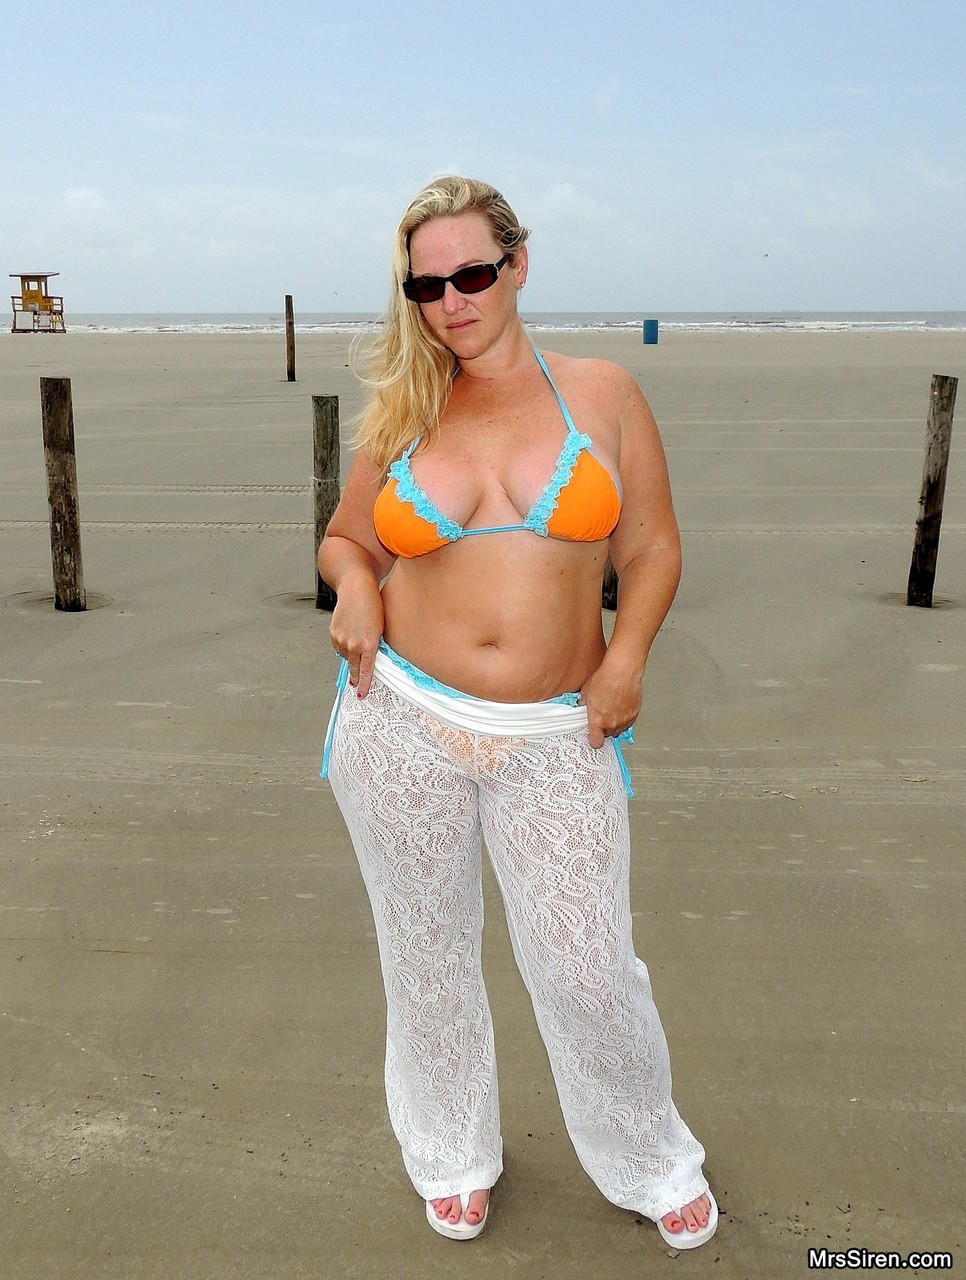 Short MILF Dee Siren strips on the beach & exposes her monster curves